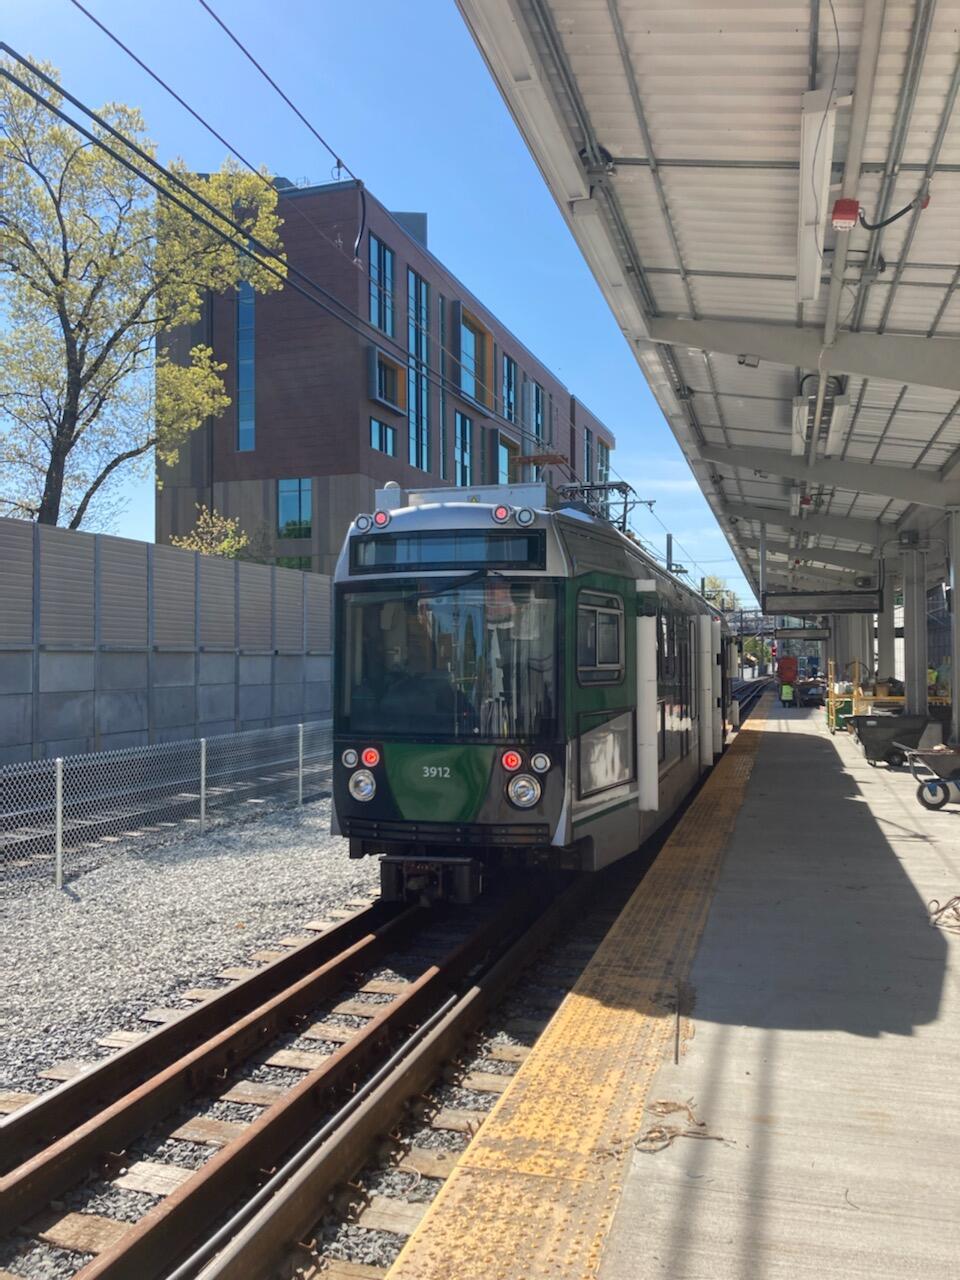 A Green Line test train arrives at Medford Tufts station